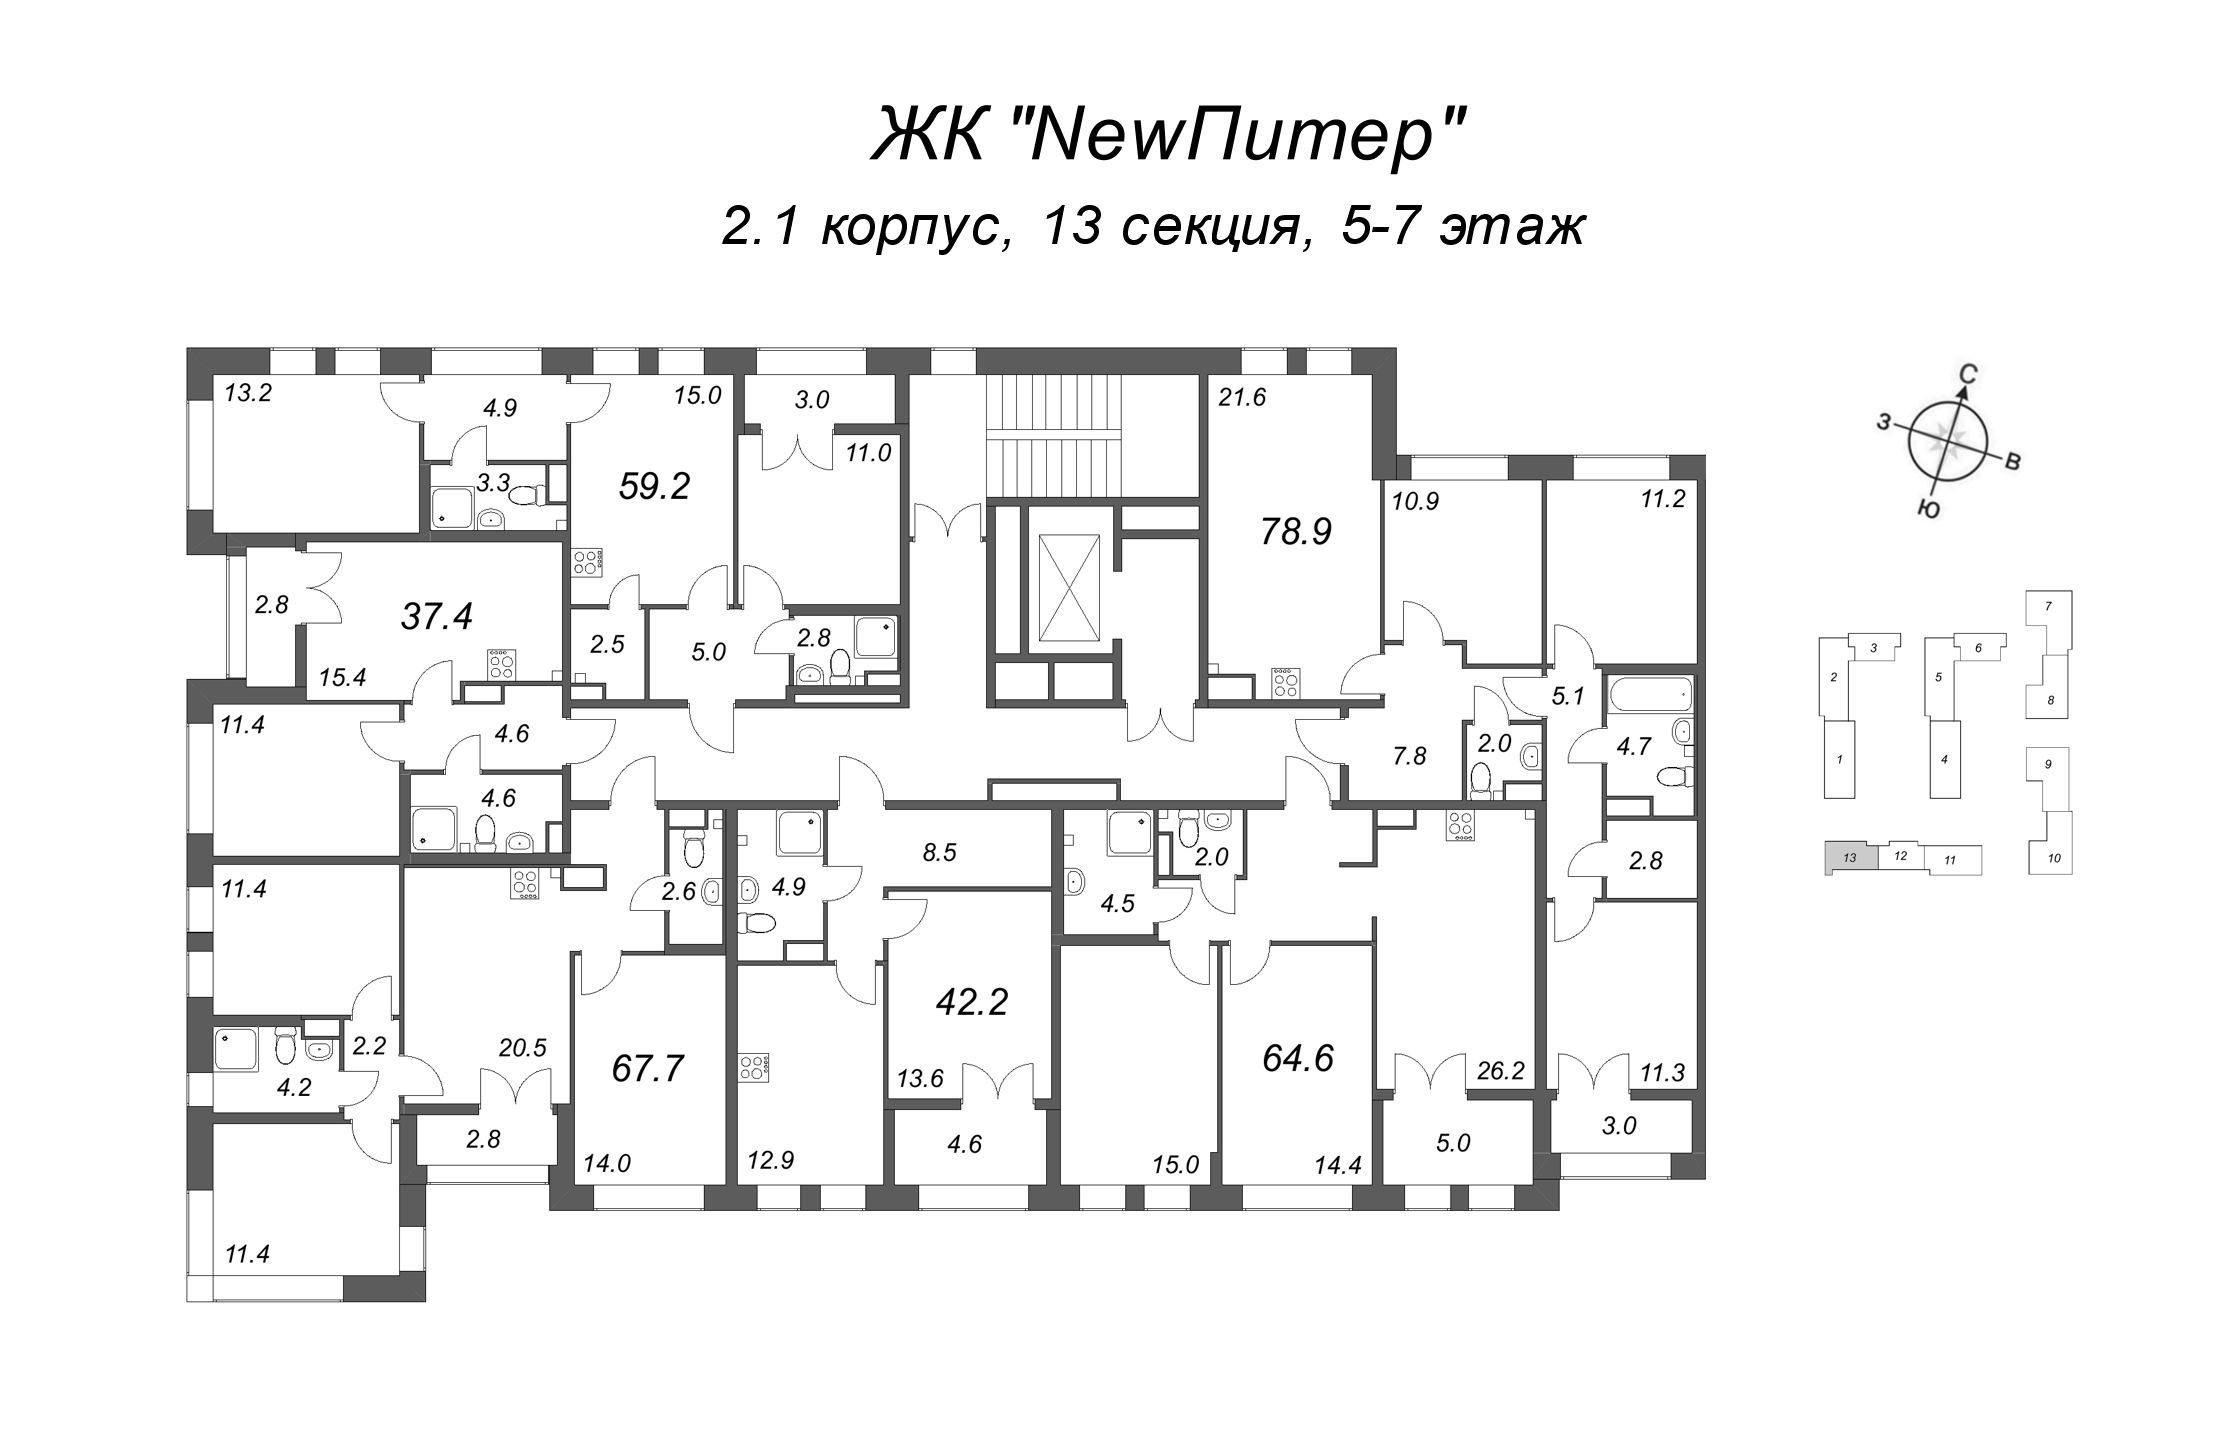 3-комнатная (Евро) квартира, 59.2 м² - планировка этажа